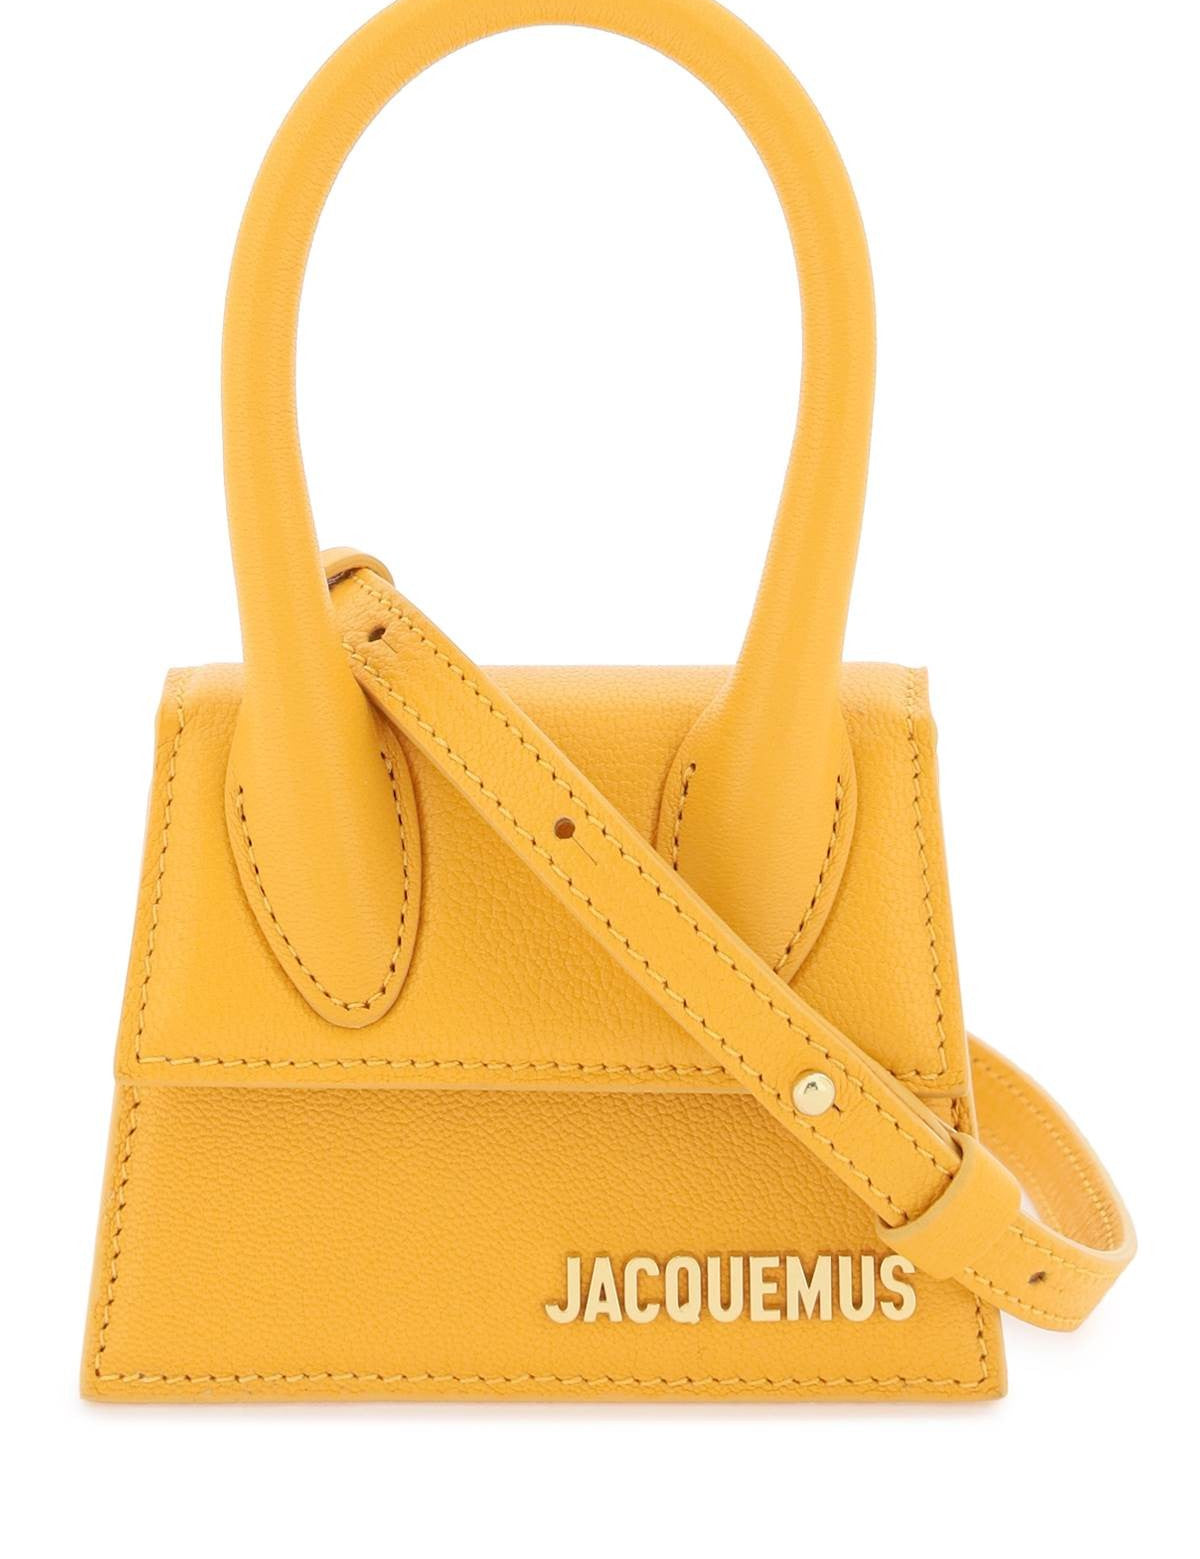 jacquemus-le-chiquito-micro-bag_b6ba8911-e610-46c8-9631-e50fc864b491.jpg